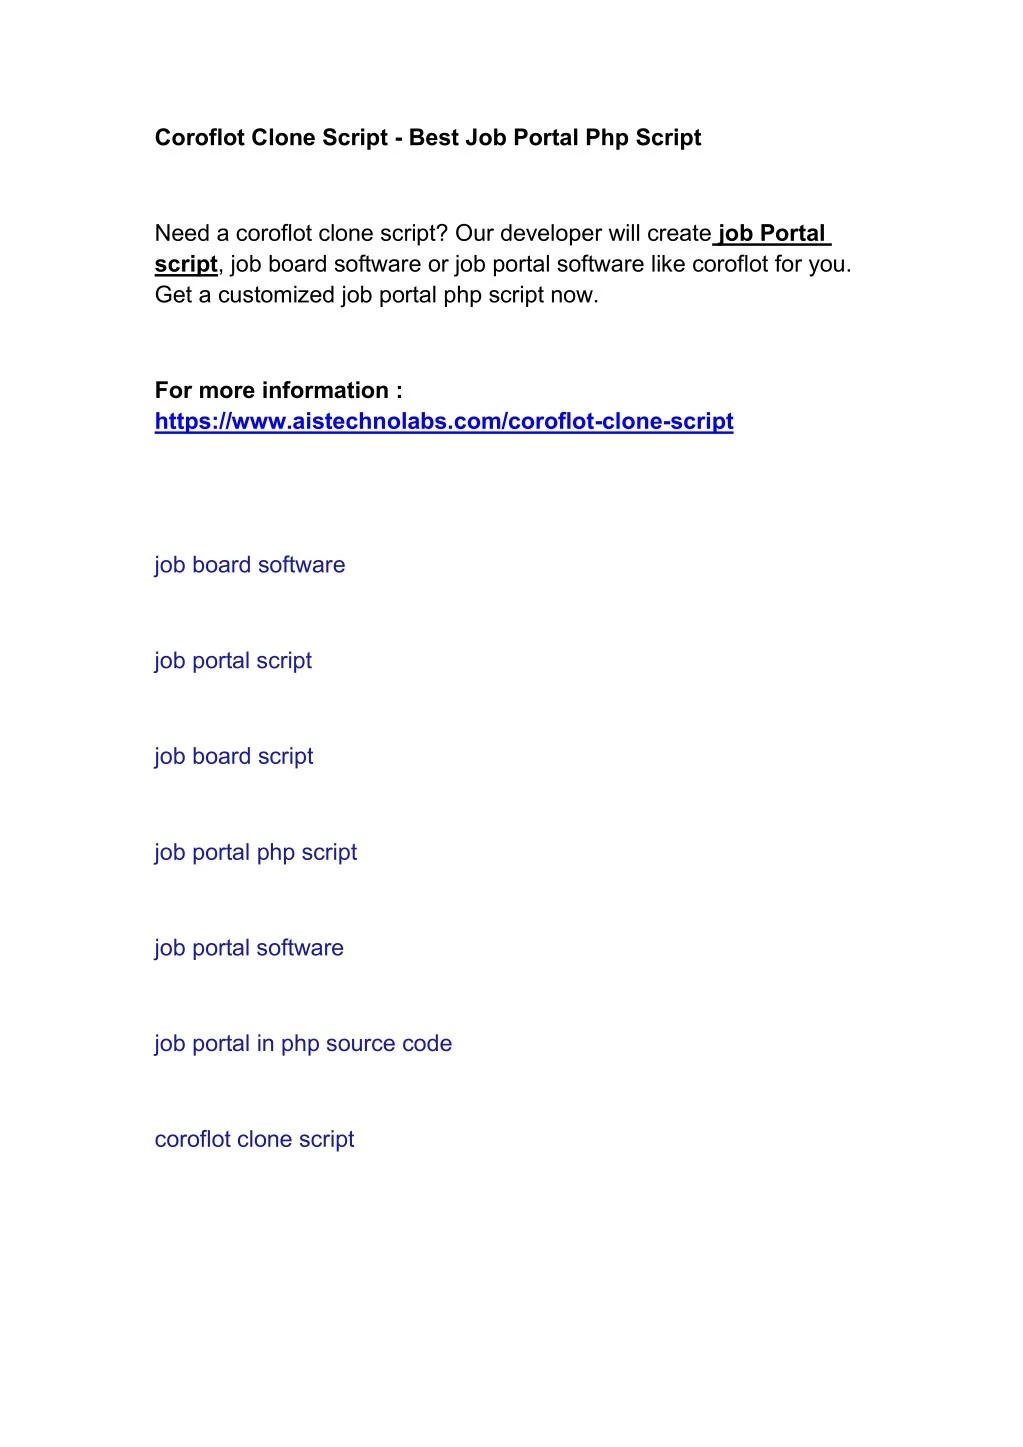 coroflot clone script best job portal php script